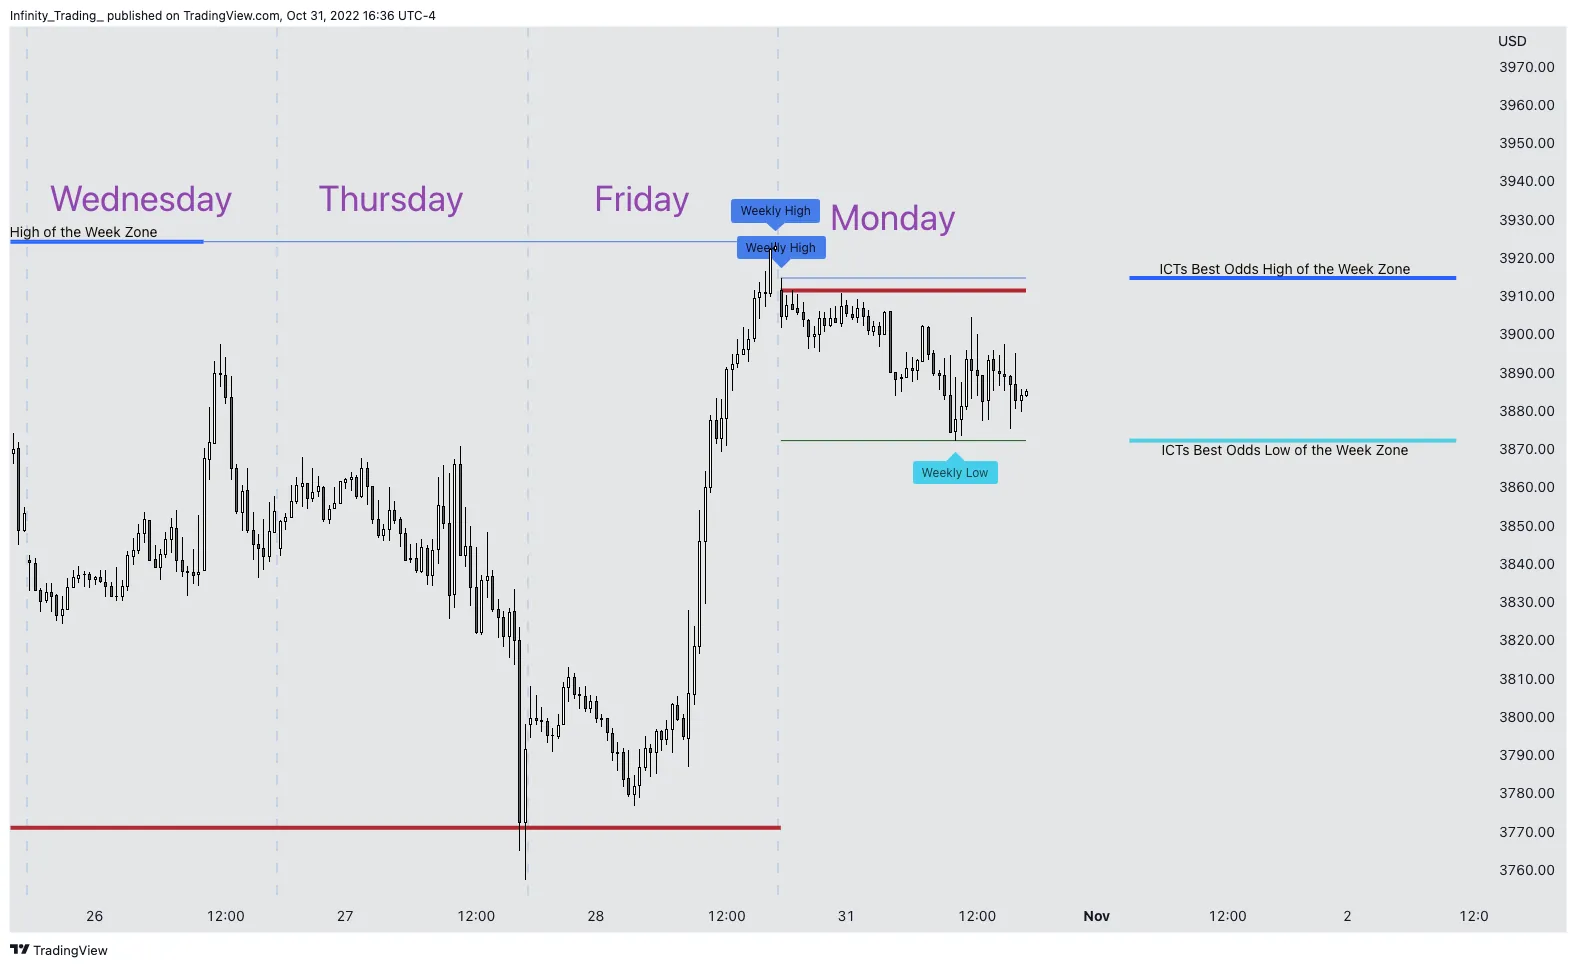 Weekly Power 3 TradingView Indicator Image 3